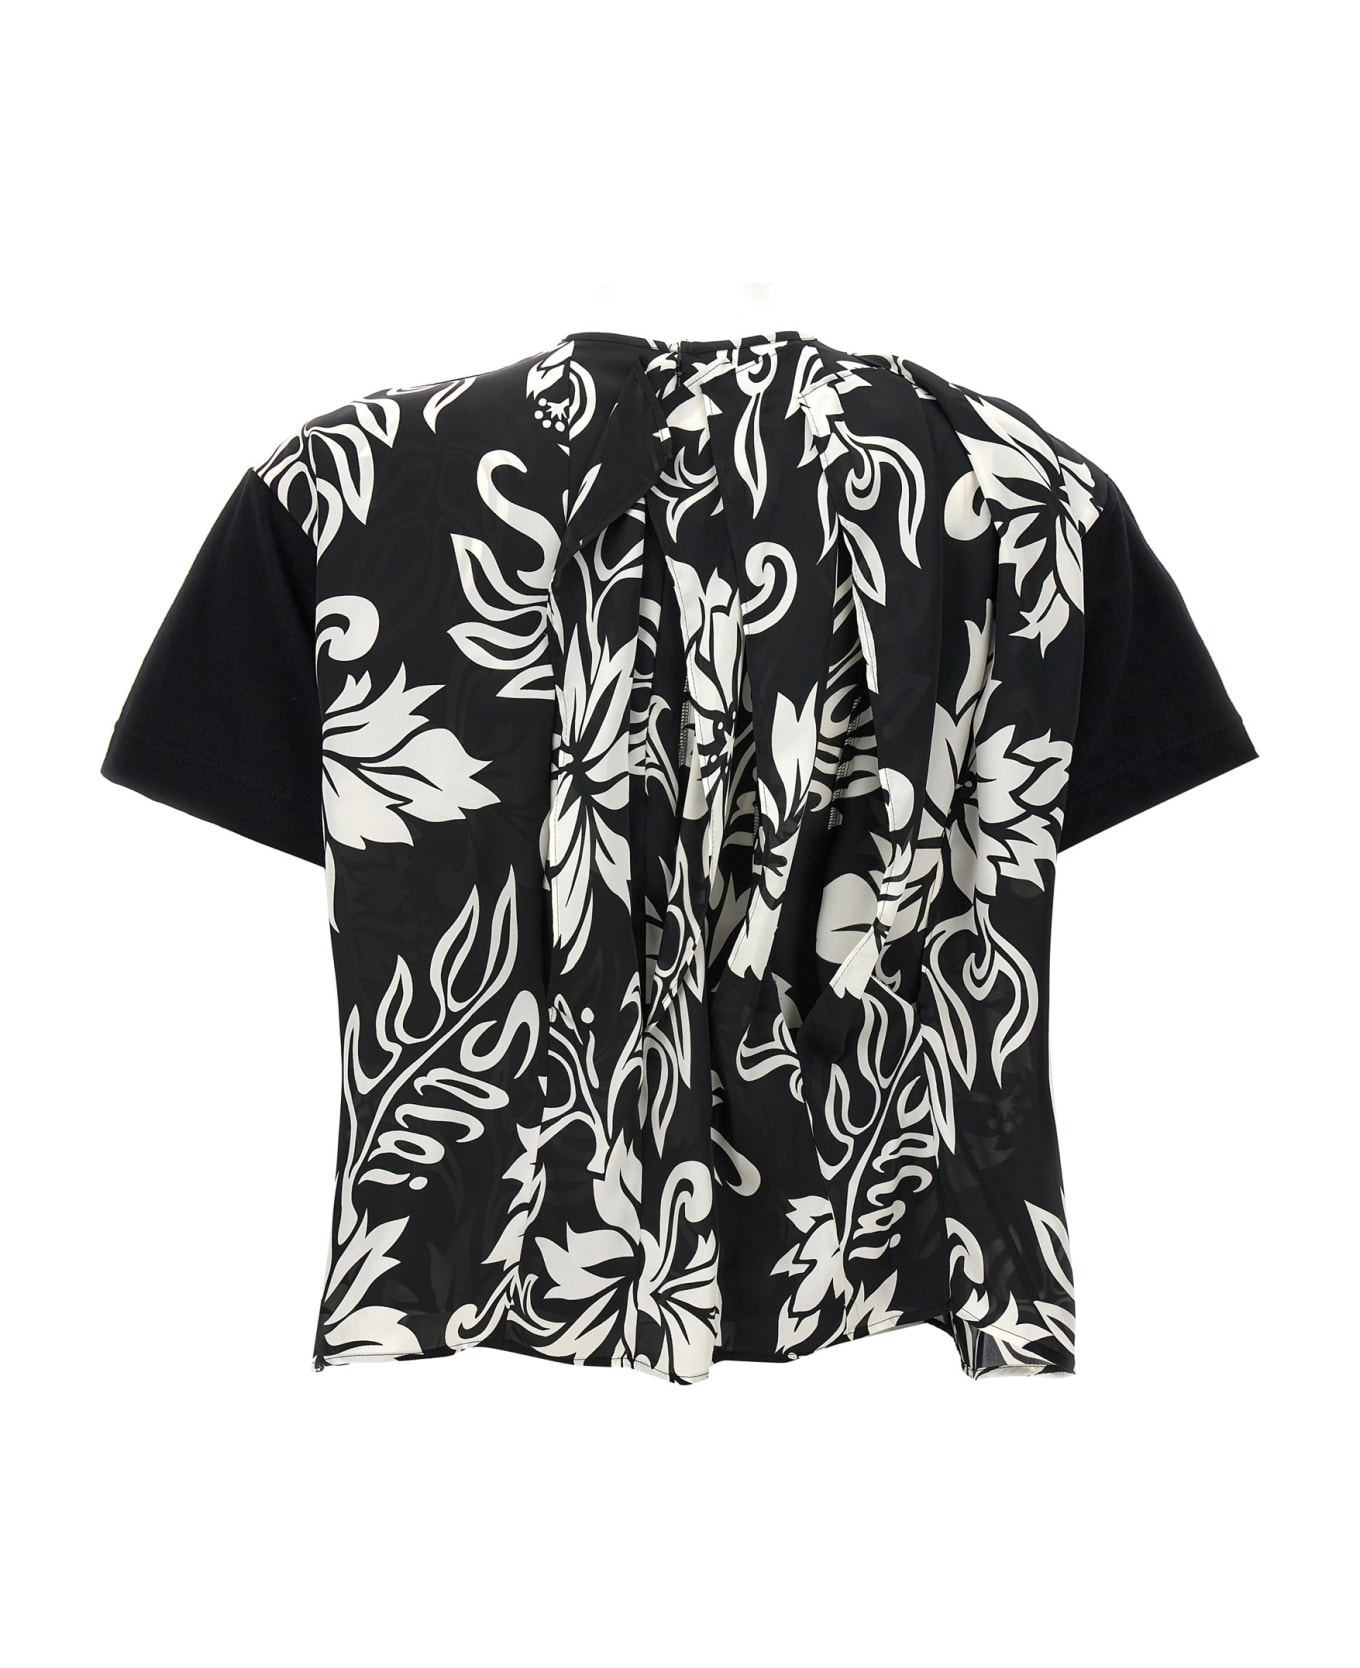 Sacai Floral Print T-shirt - Black Black